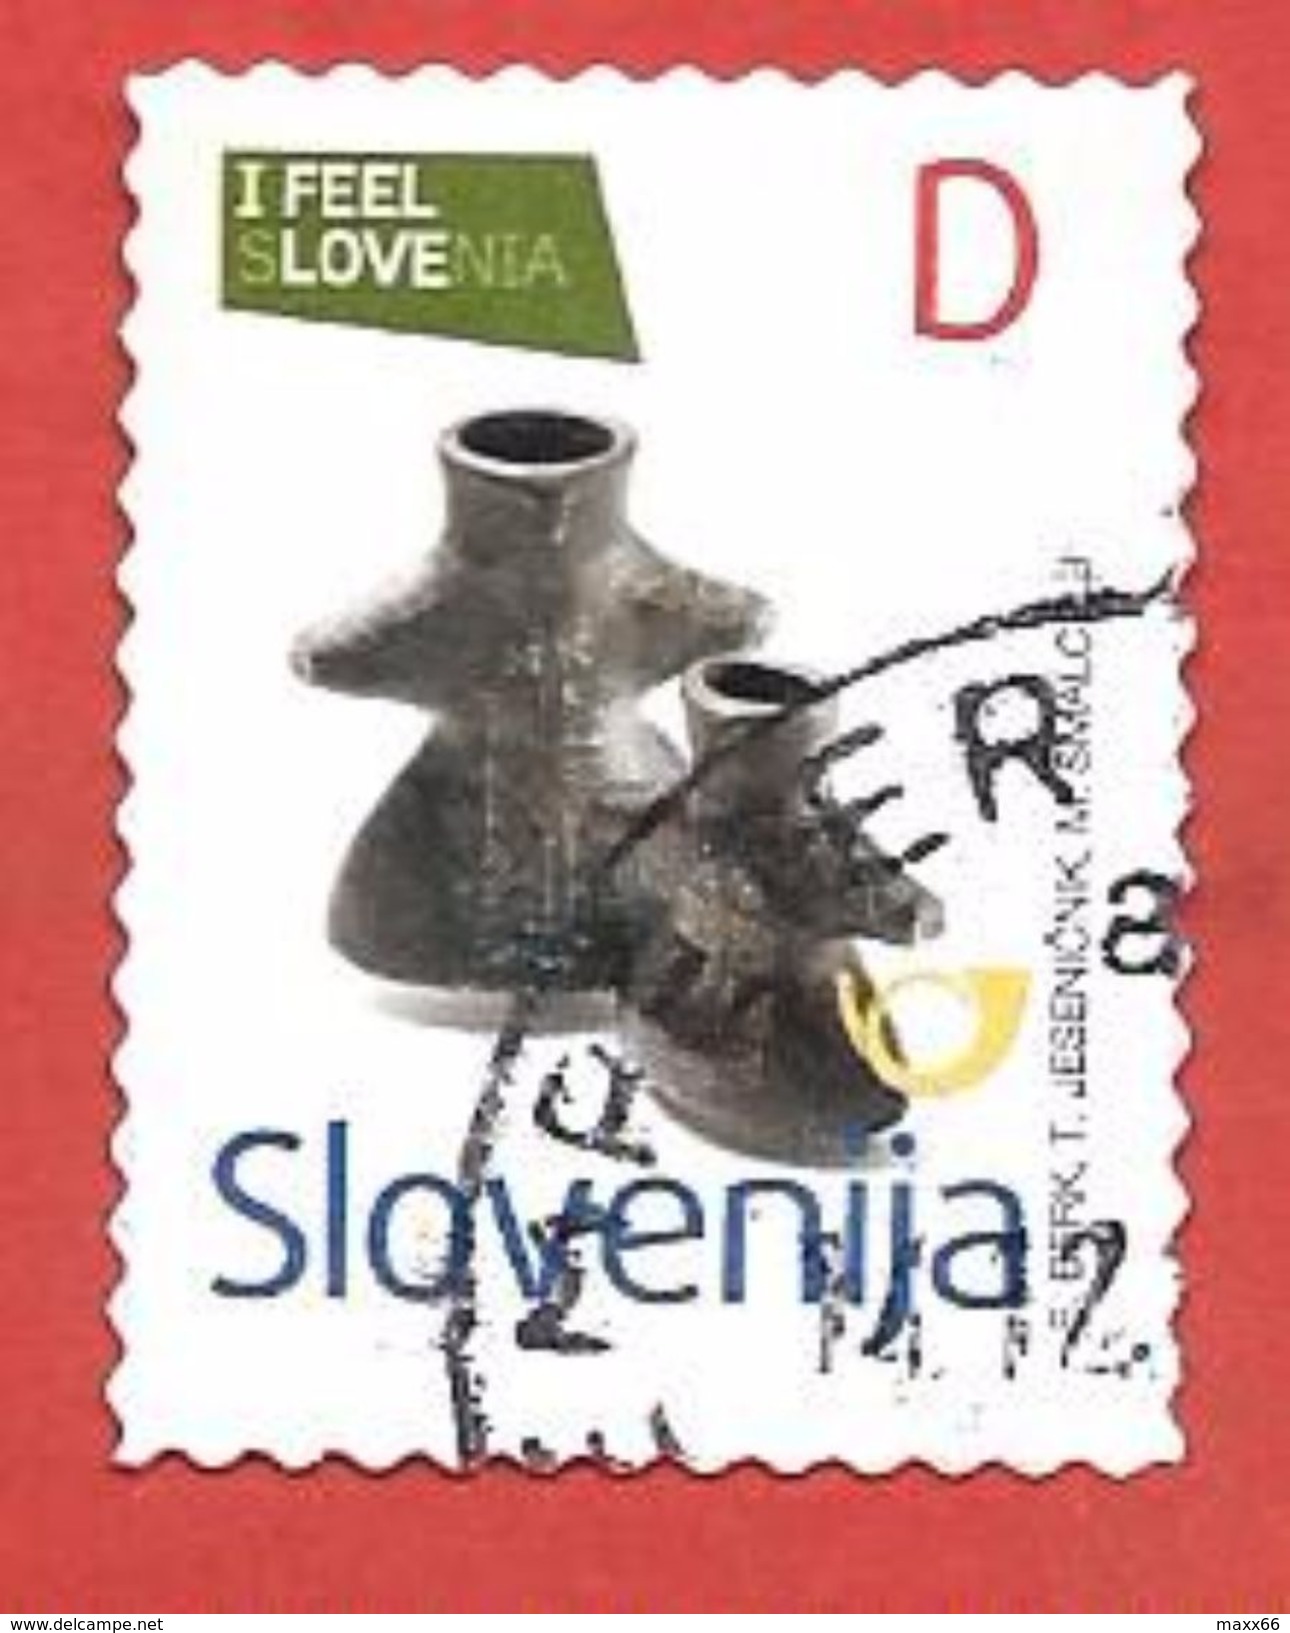 SLOVENIA USATO - 2013 - I Feel Slovenia - Figural Vase - Ceramica - € D - Michel SI 991 - Slovenia